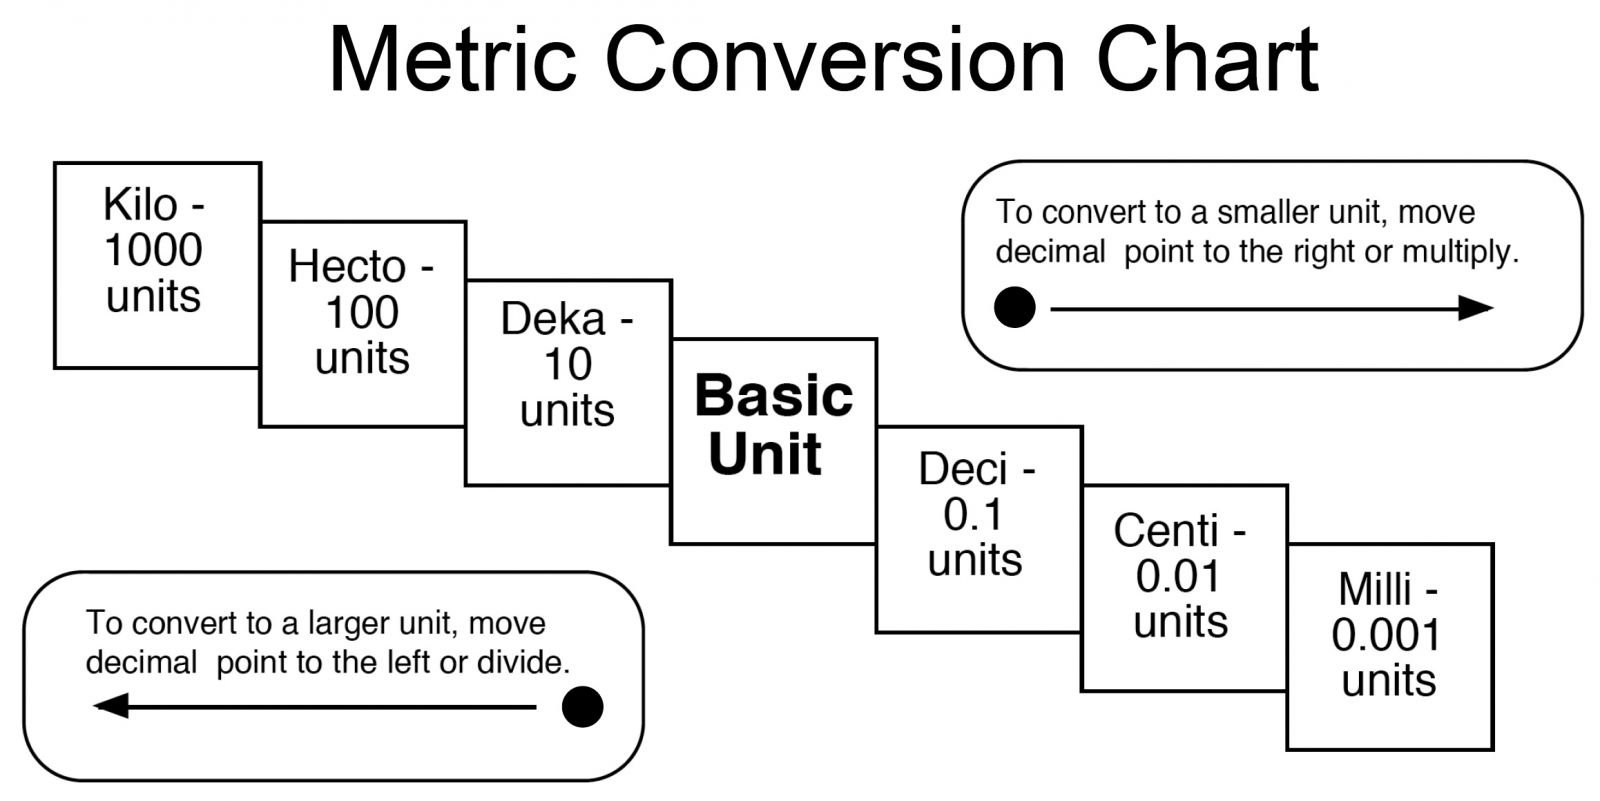 Scientific Notation Conversion Chart